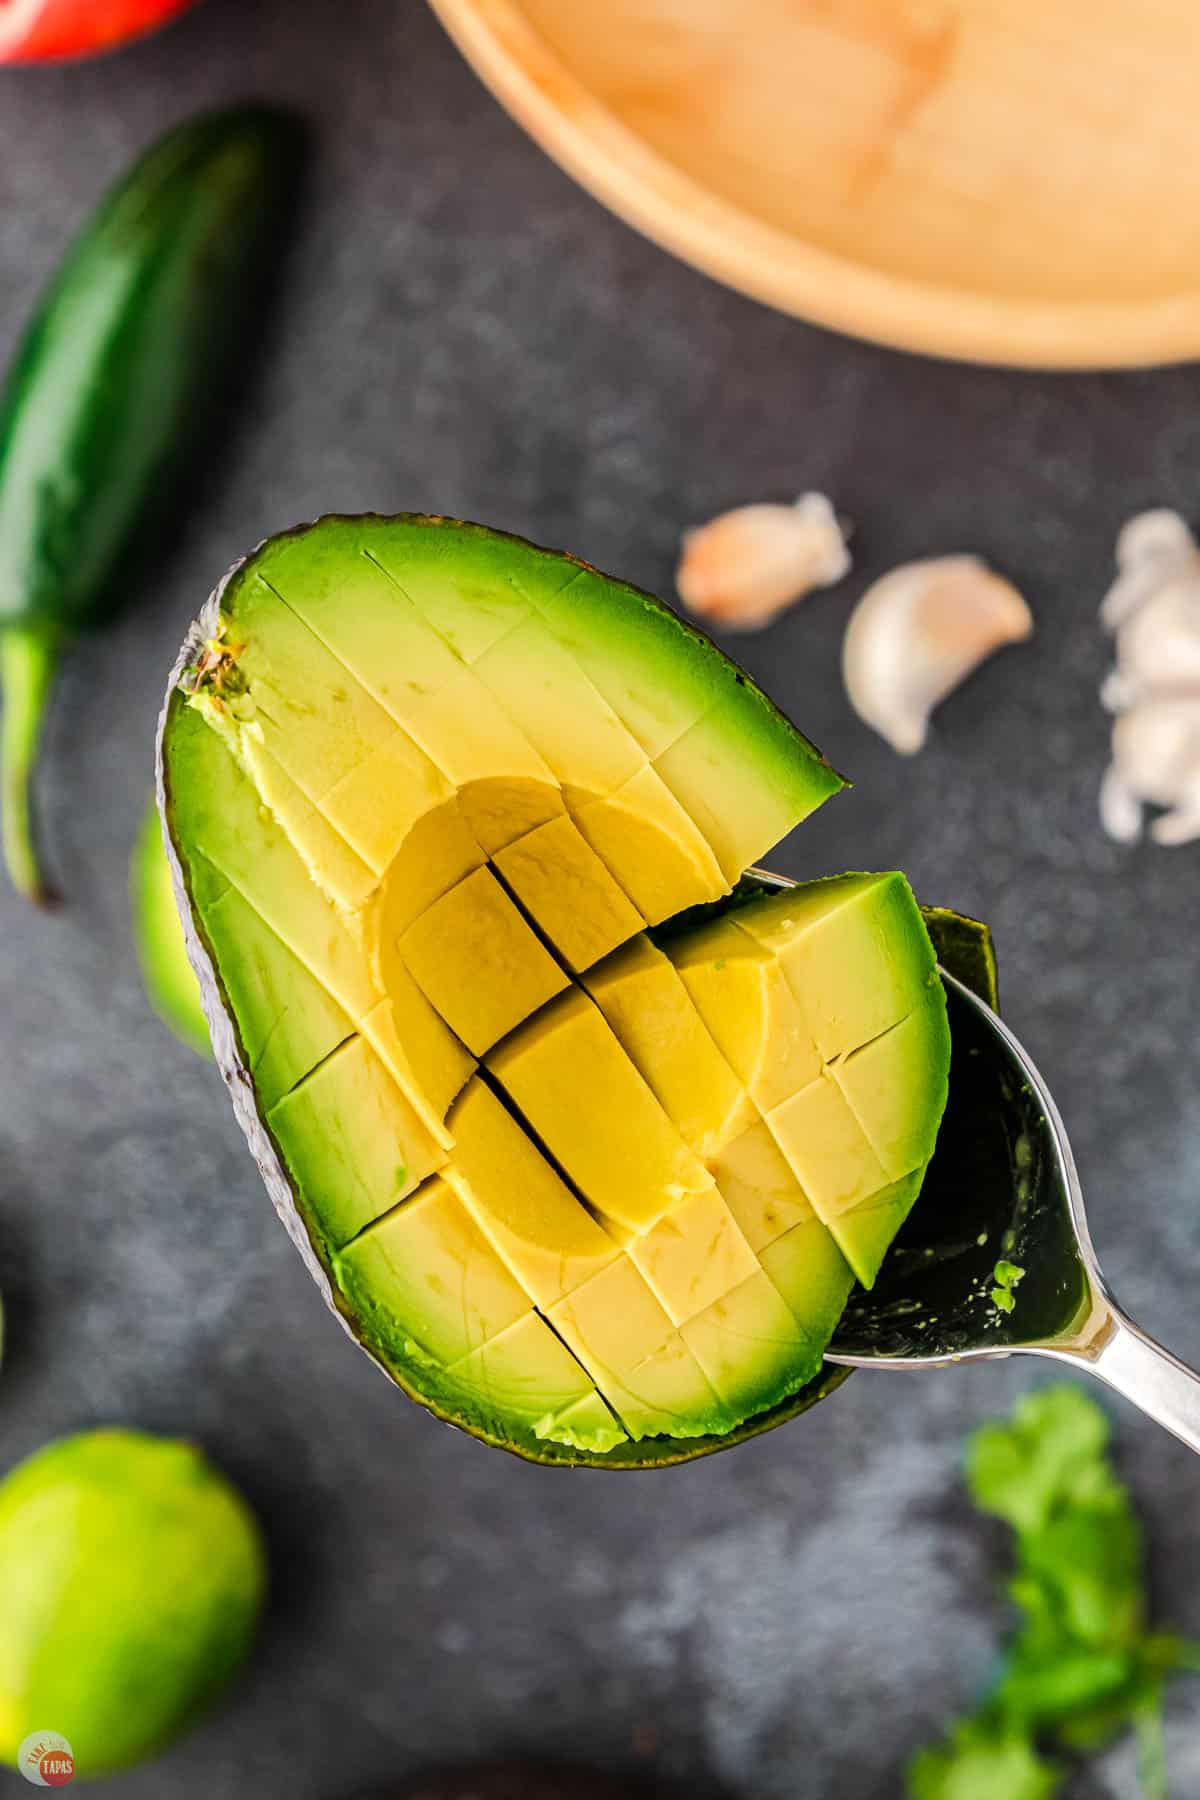 slice the avocados into chunks